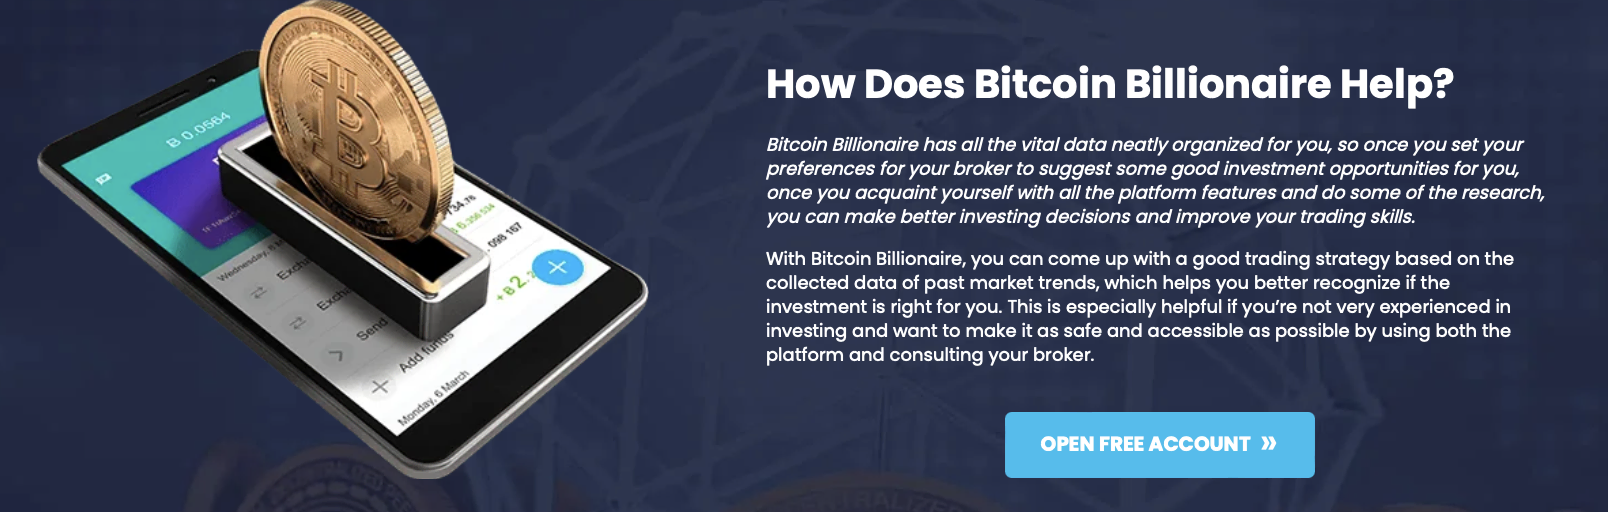 How Bitcoin Billionaire works